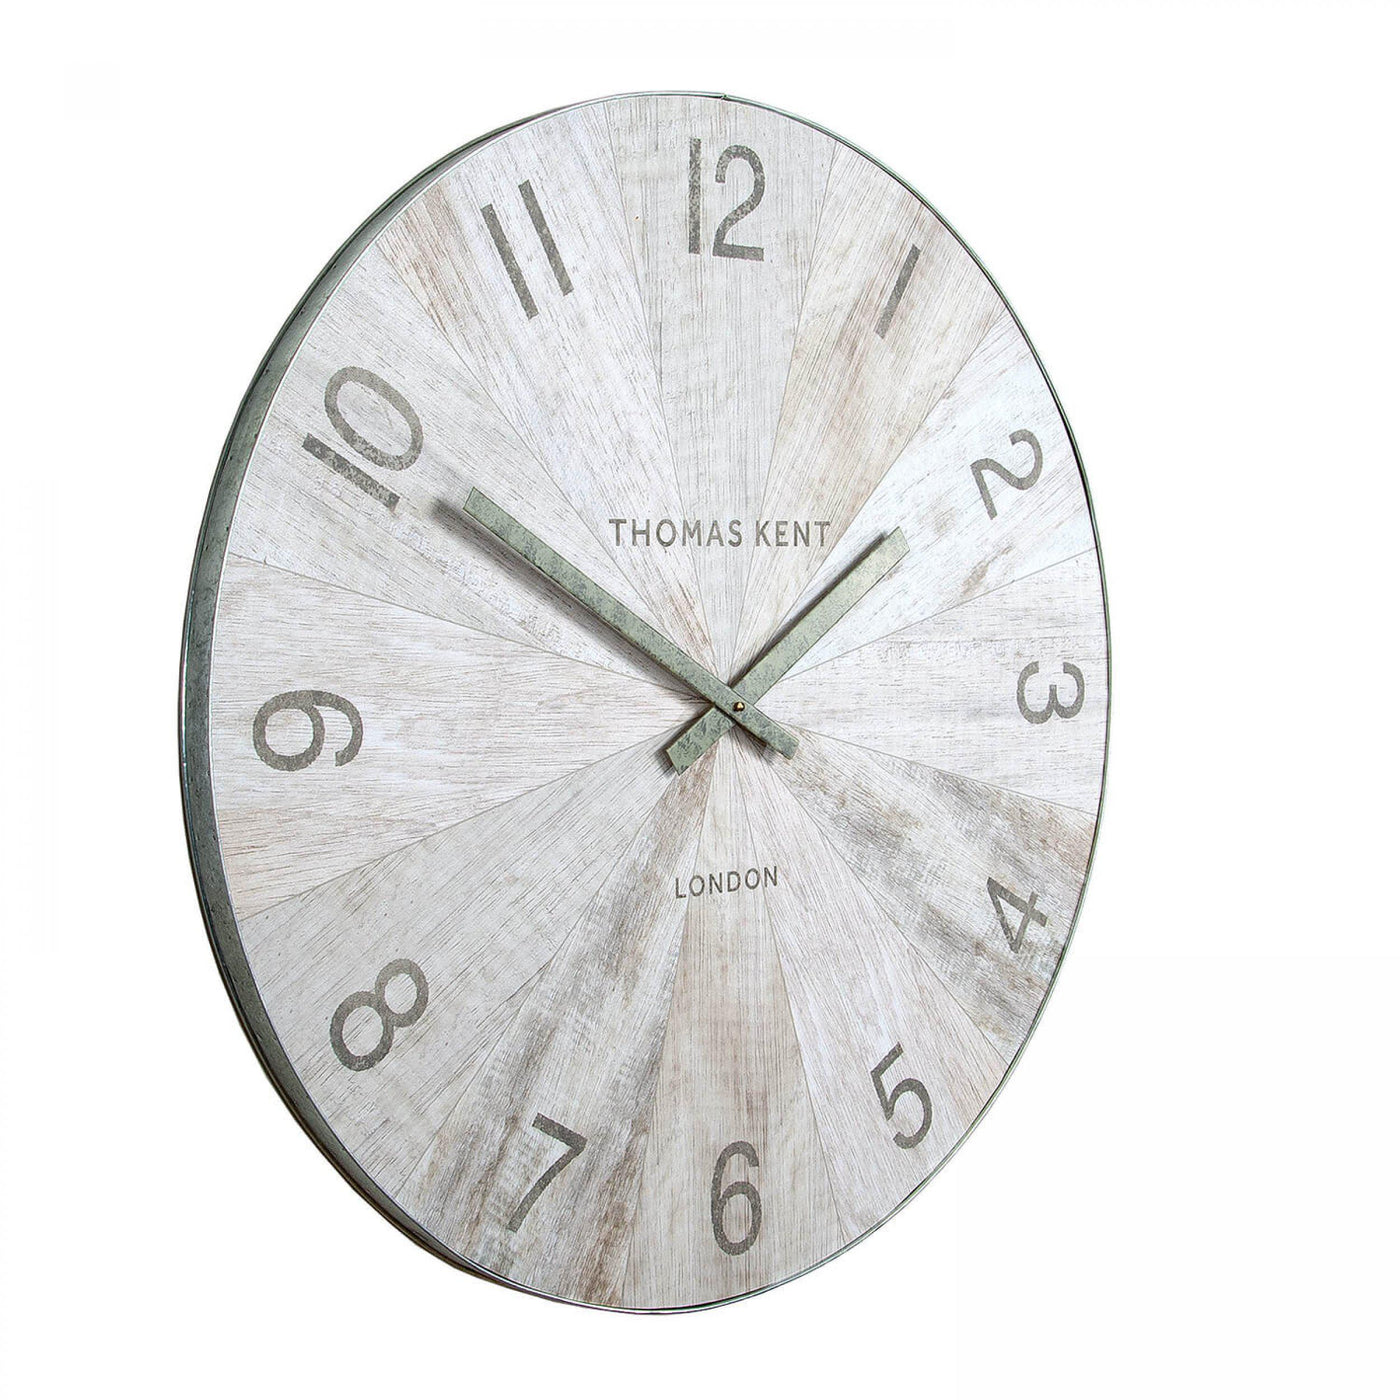 Thomas Kent London. Wharf Wall Clock 45" (114cm) Pickled Oak - timeframedclocks